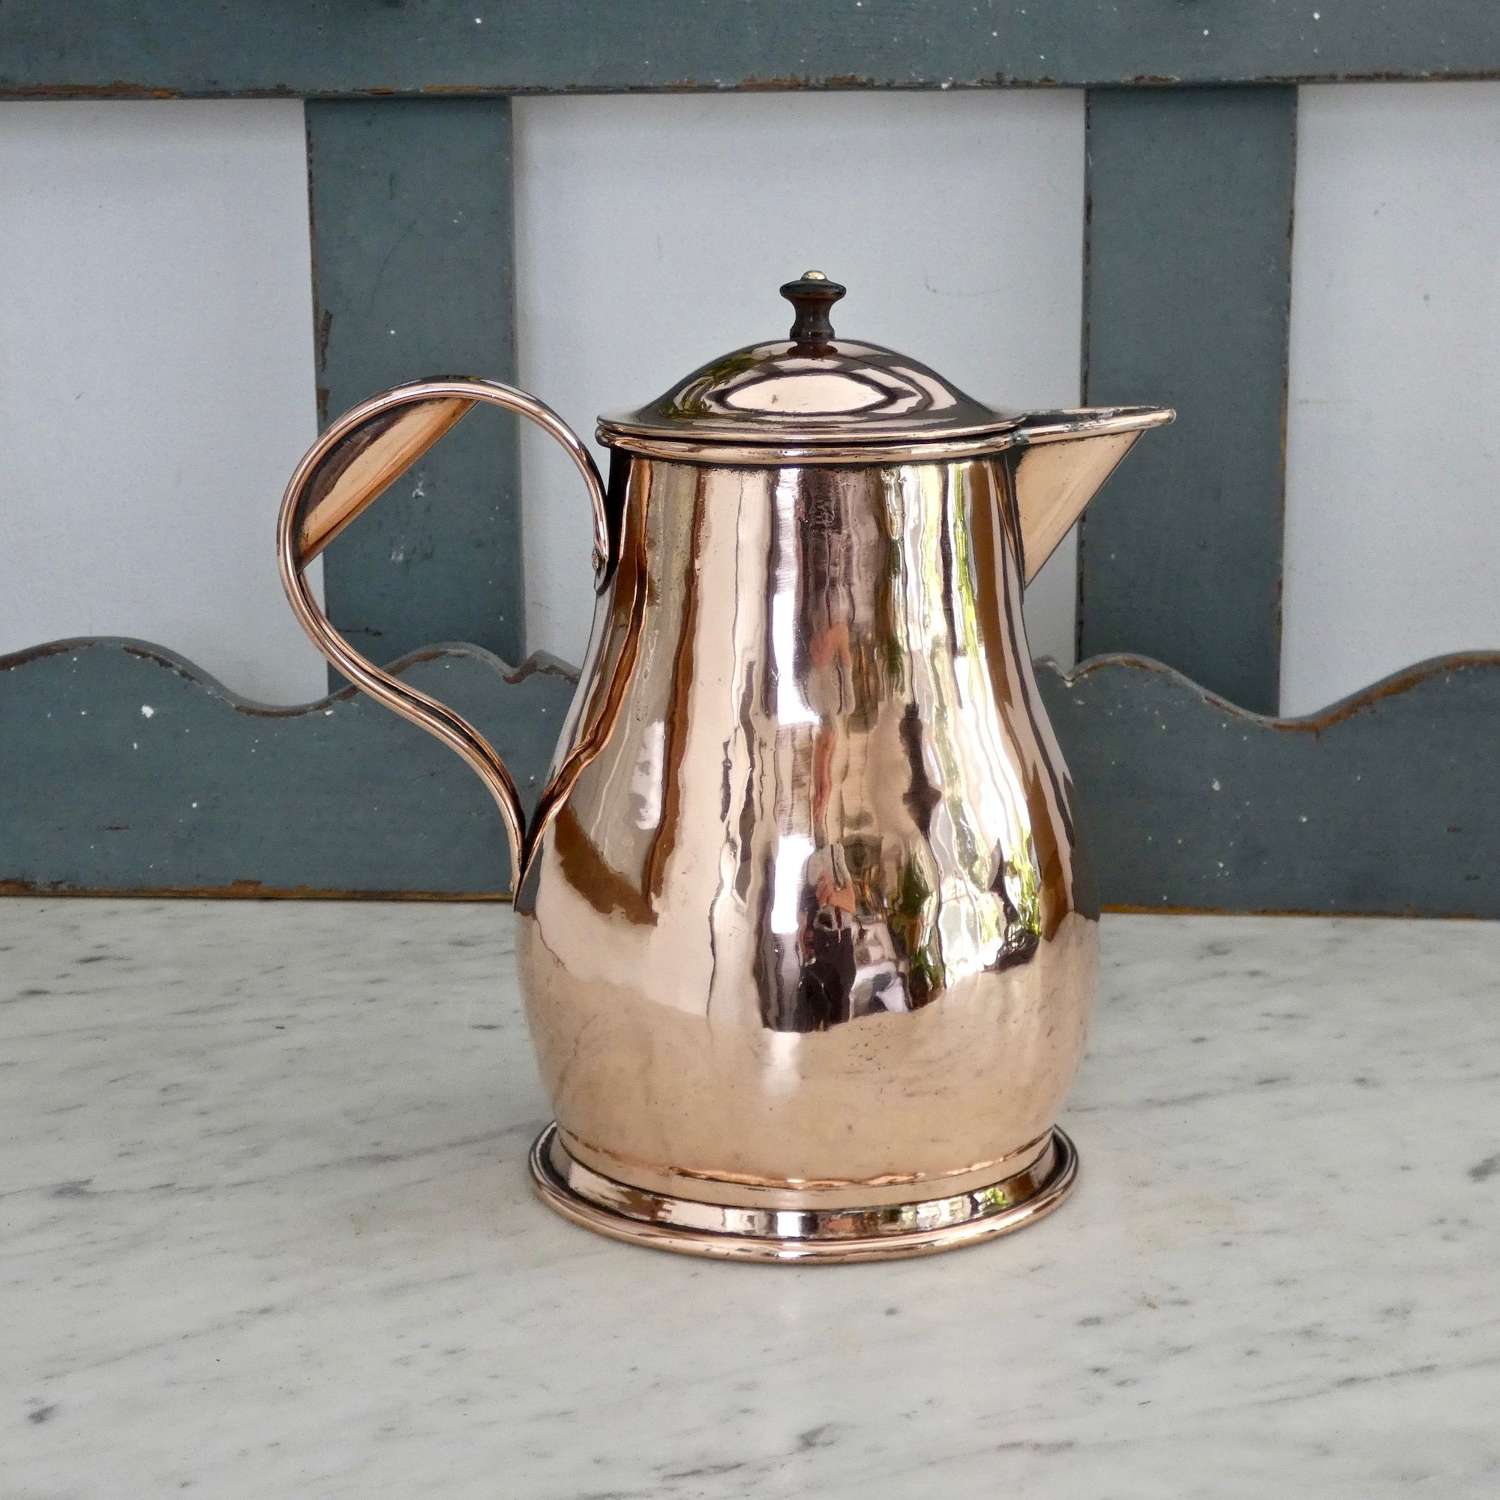 Copper hot water jug